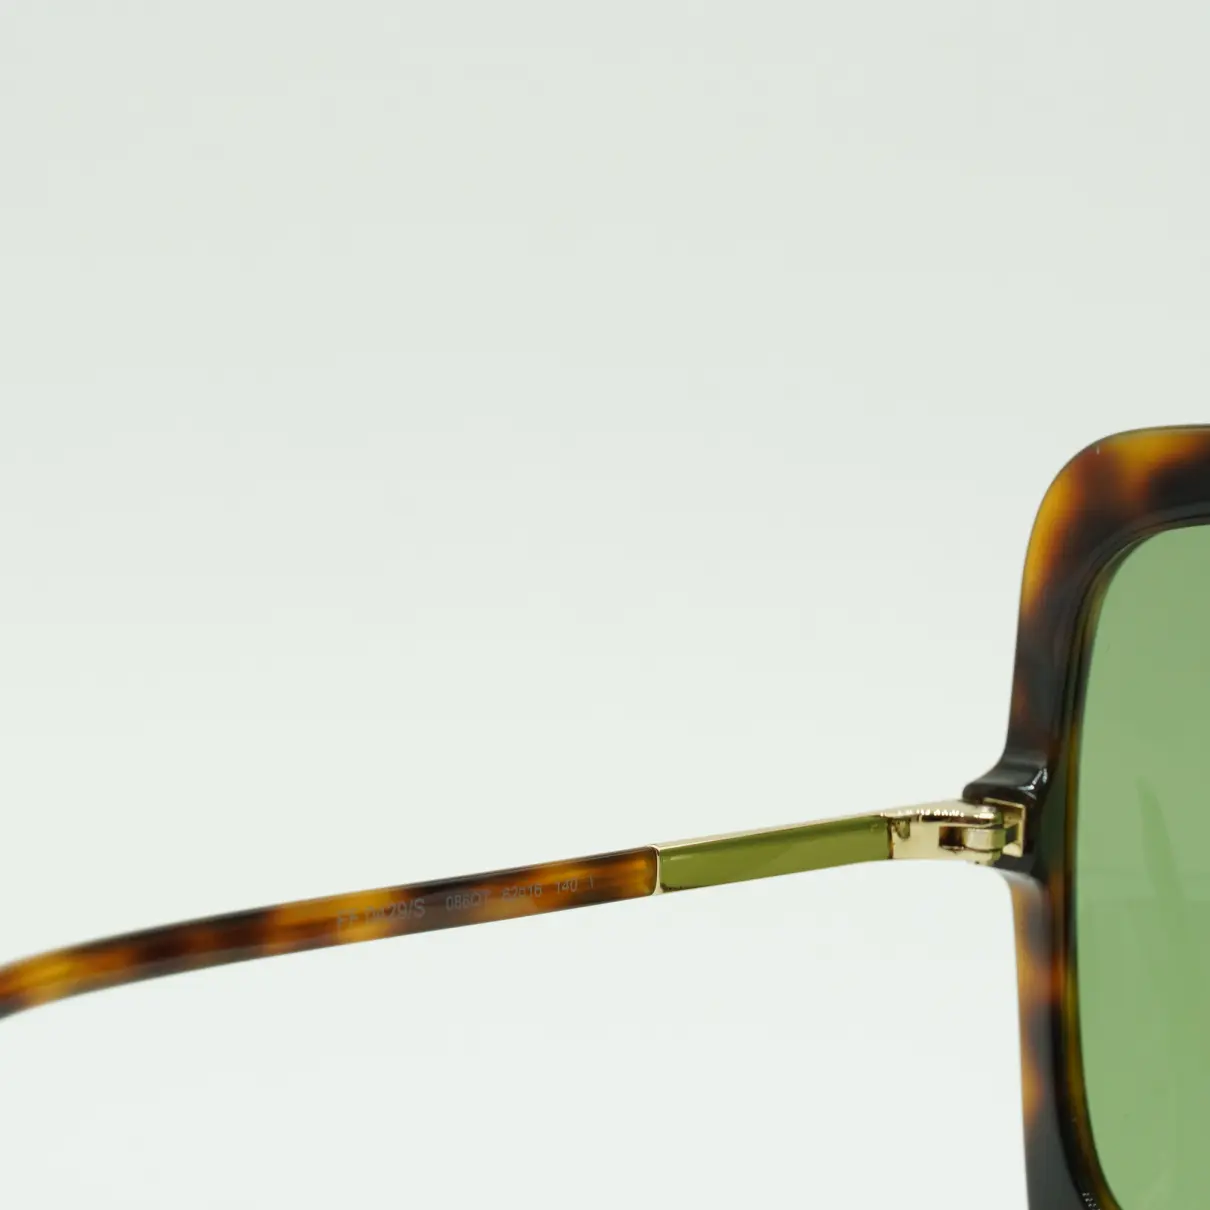 Oversized sunglasses Fendi